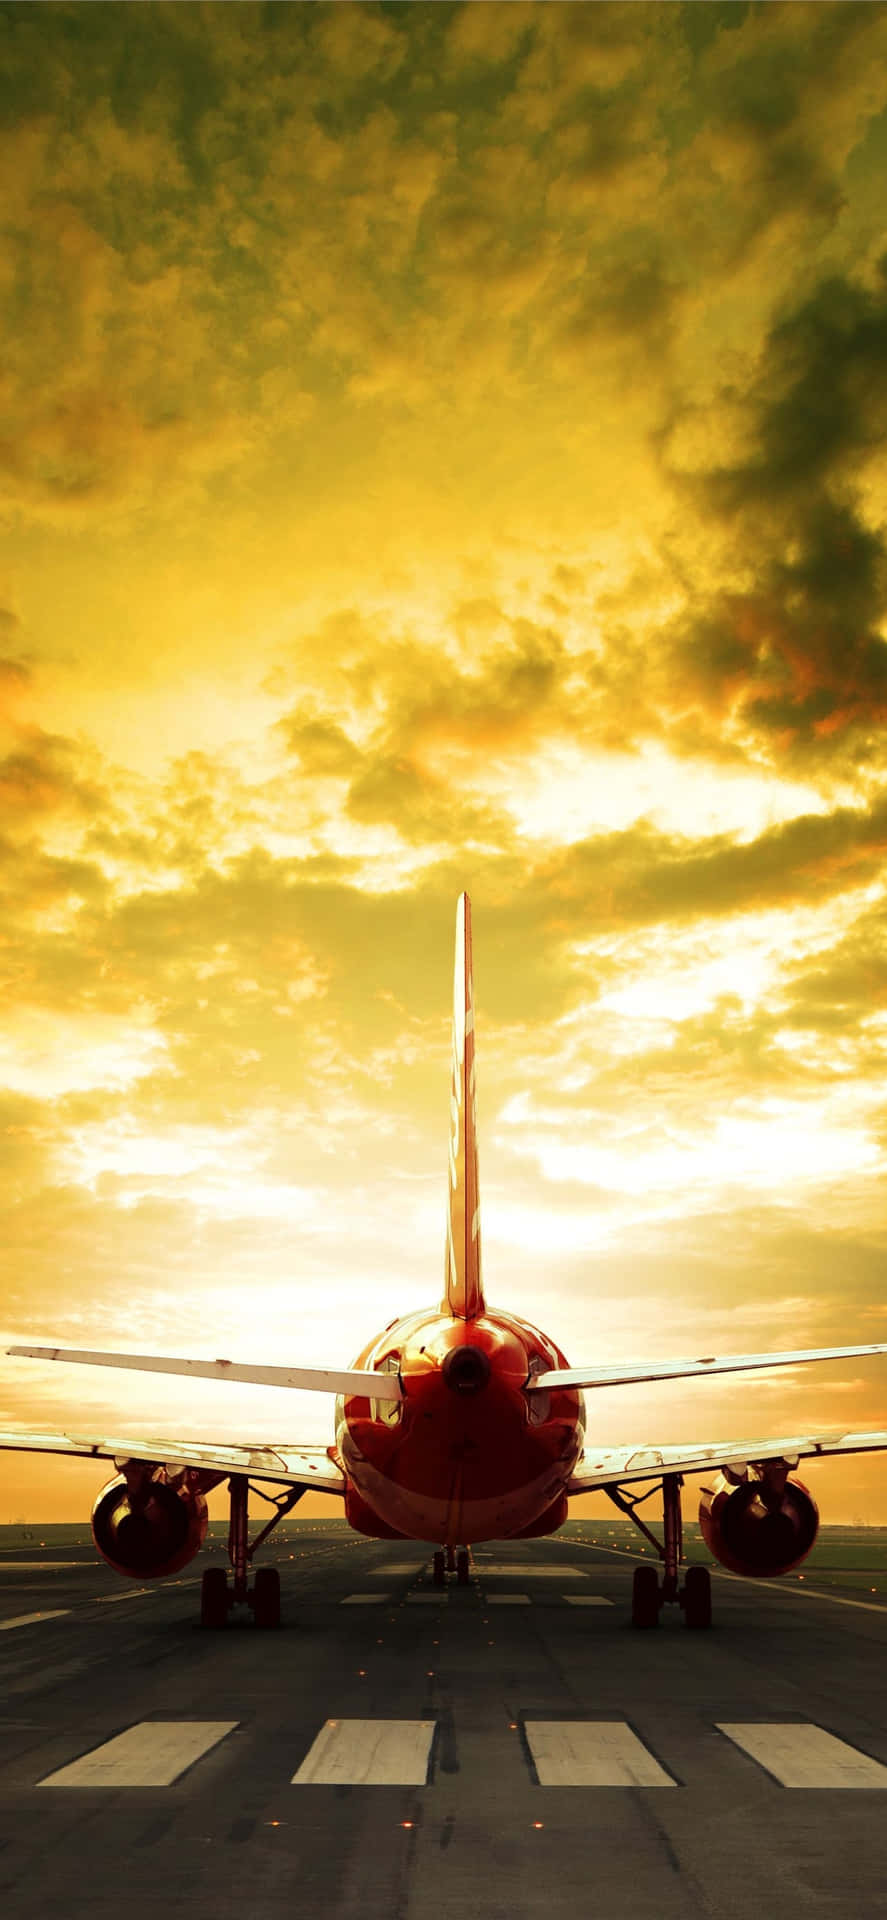 Sunset Airplane On Runway.jpg Wallpaper